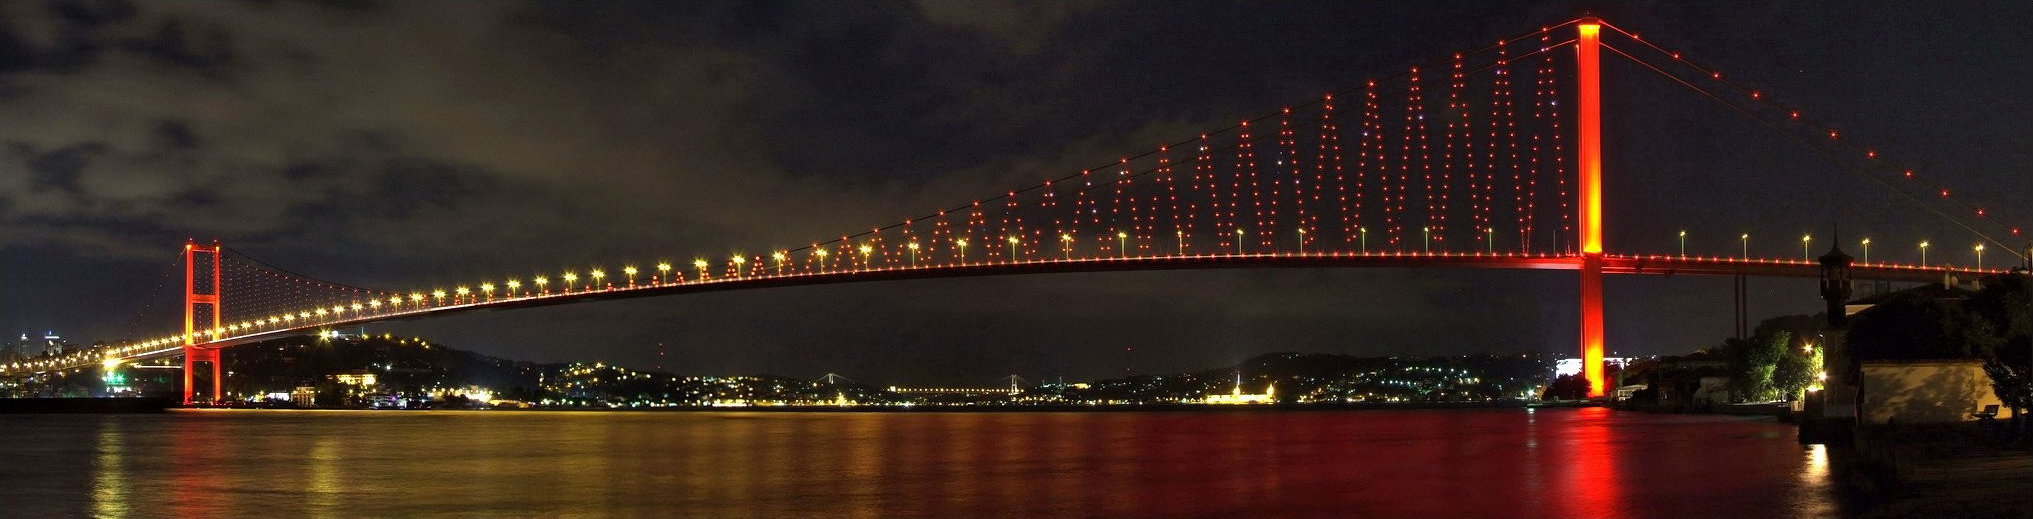 Bosphorus_Bridge_Night.jpg